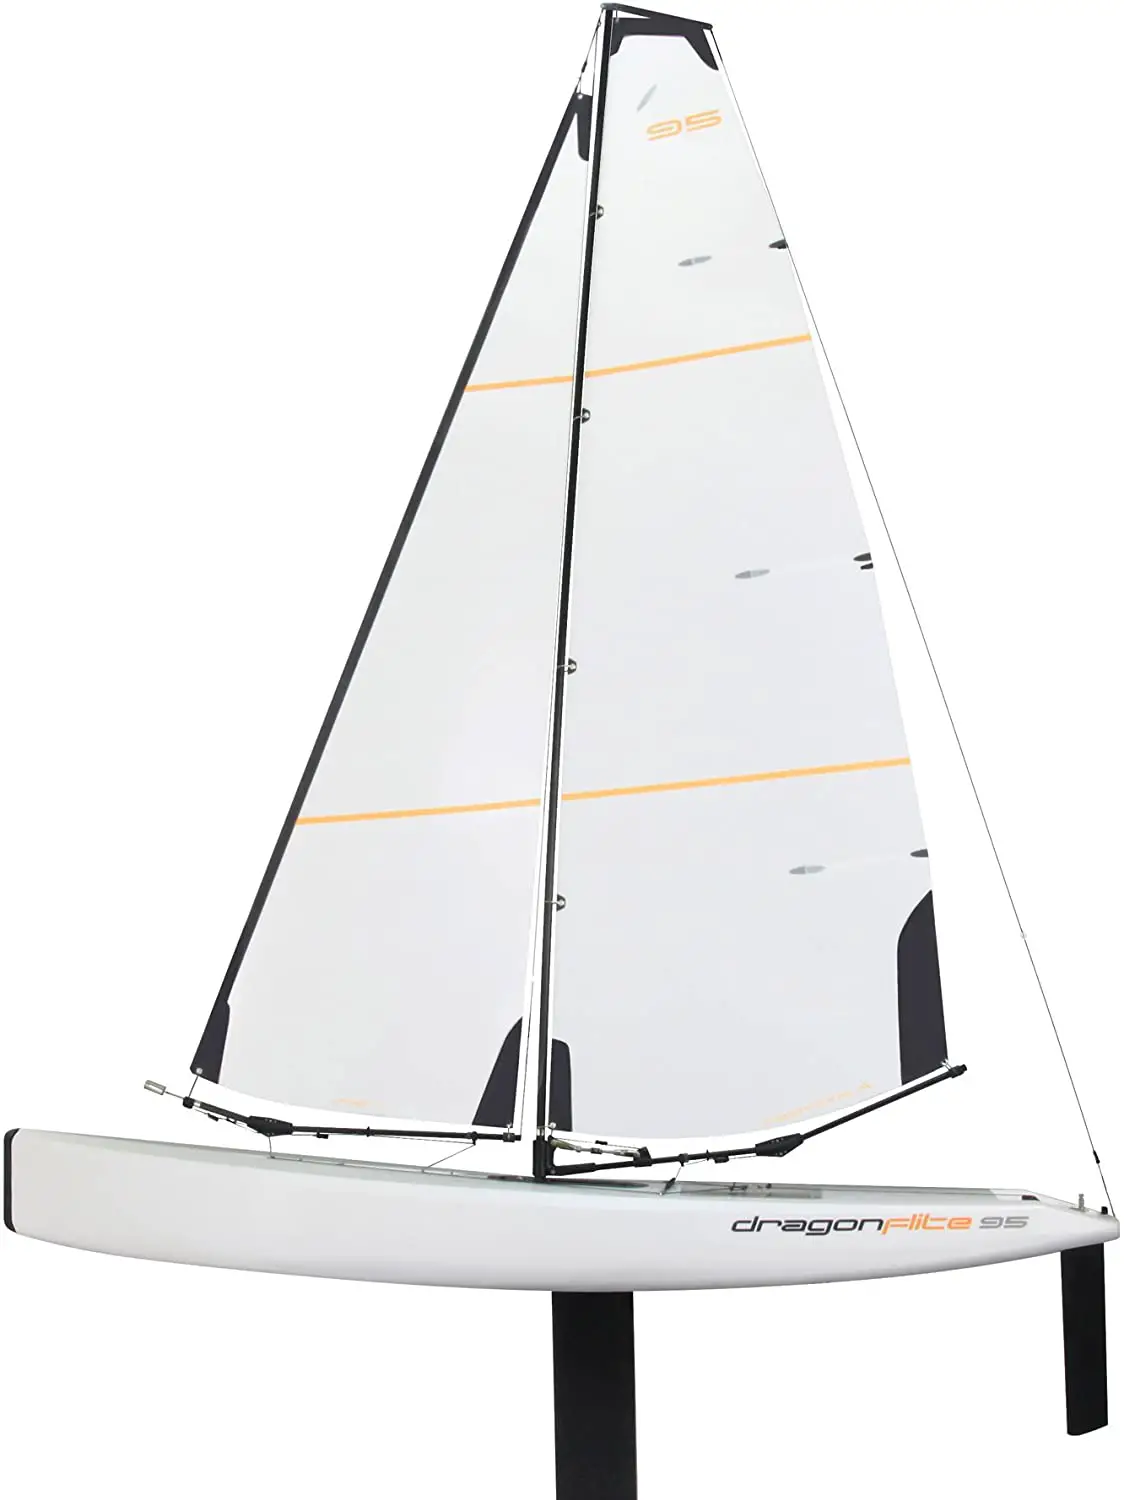 3x1 rc sailboat